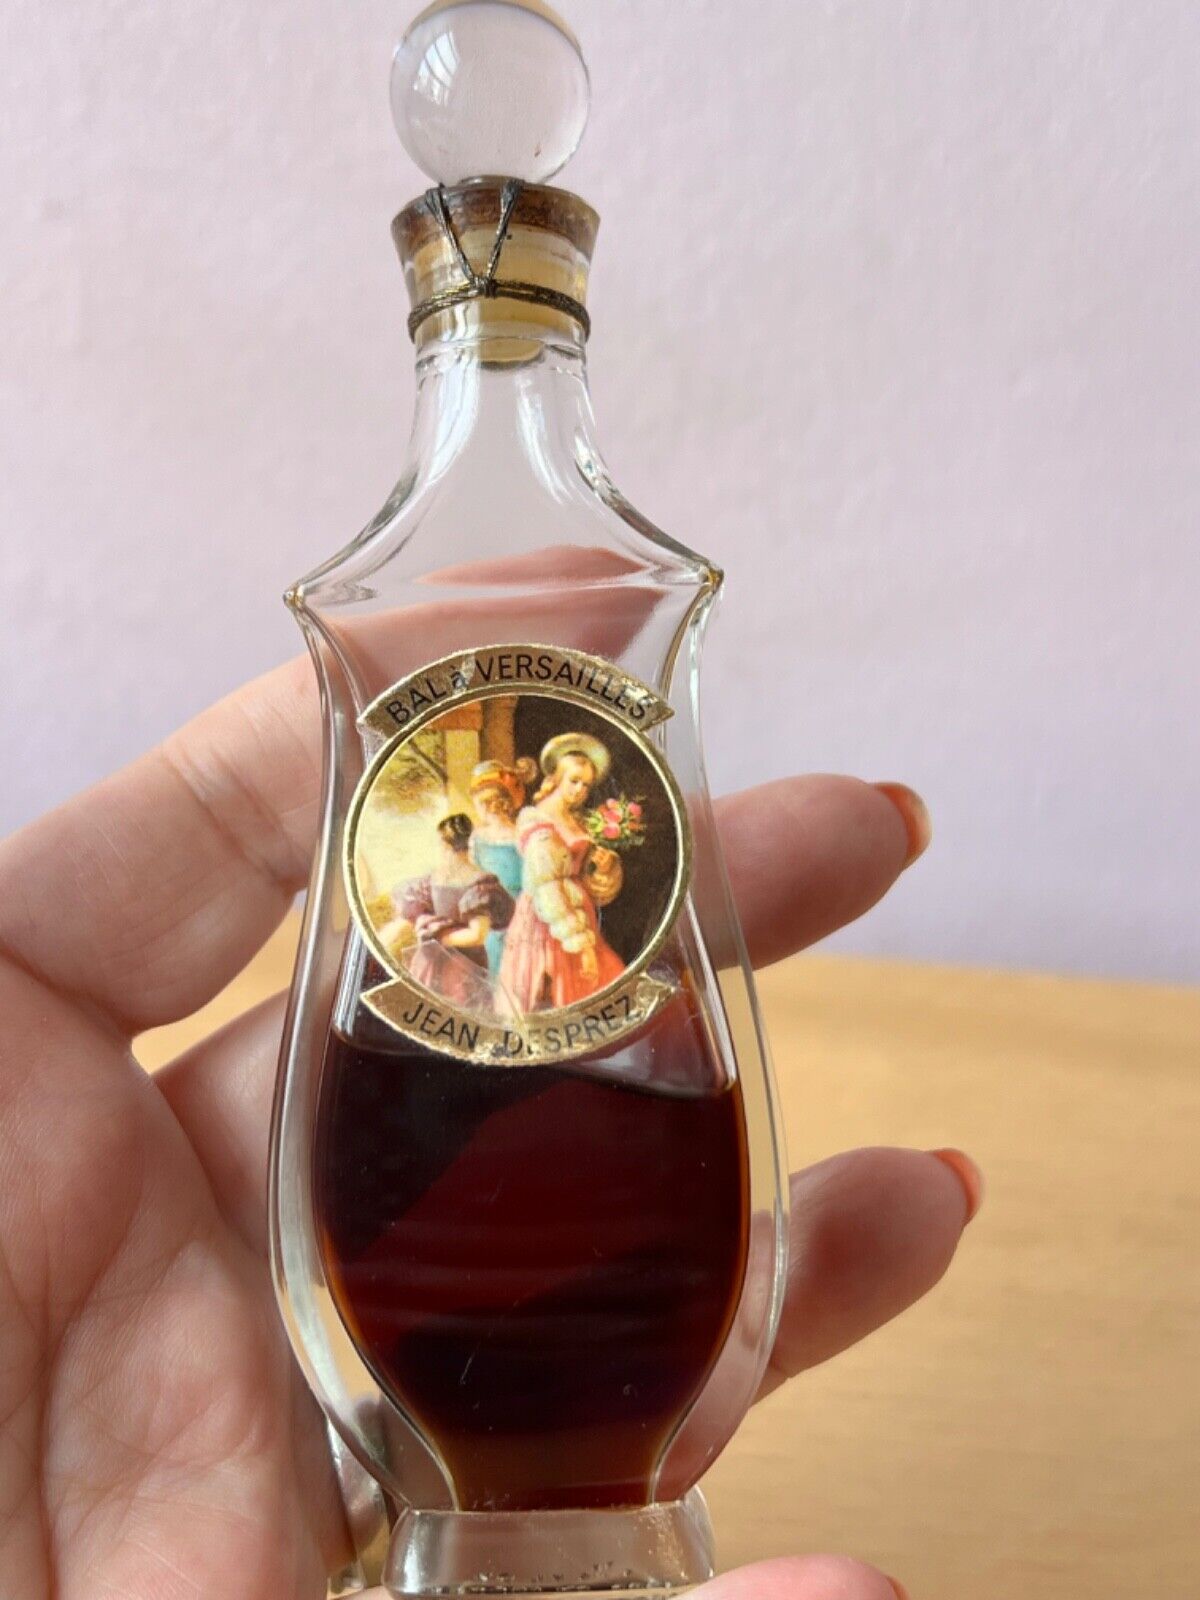 VINTAGE Original BAL A VERSAILLES Jean Desprez Glass Stopper Bottle 4 1/2 oz